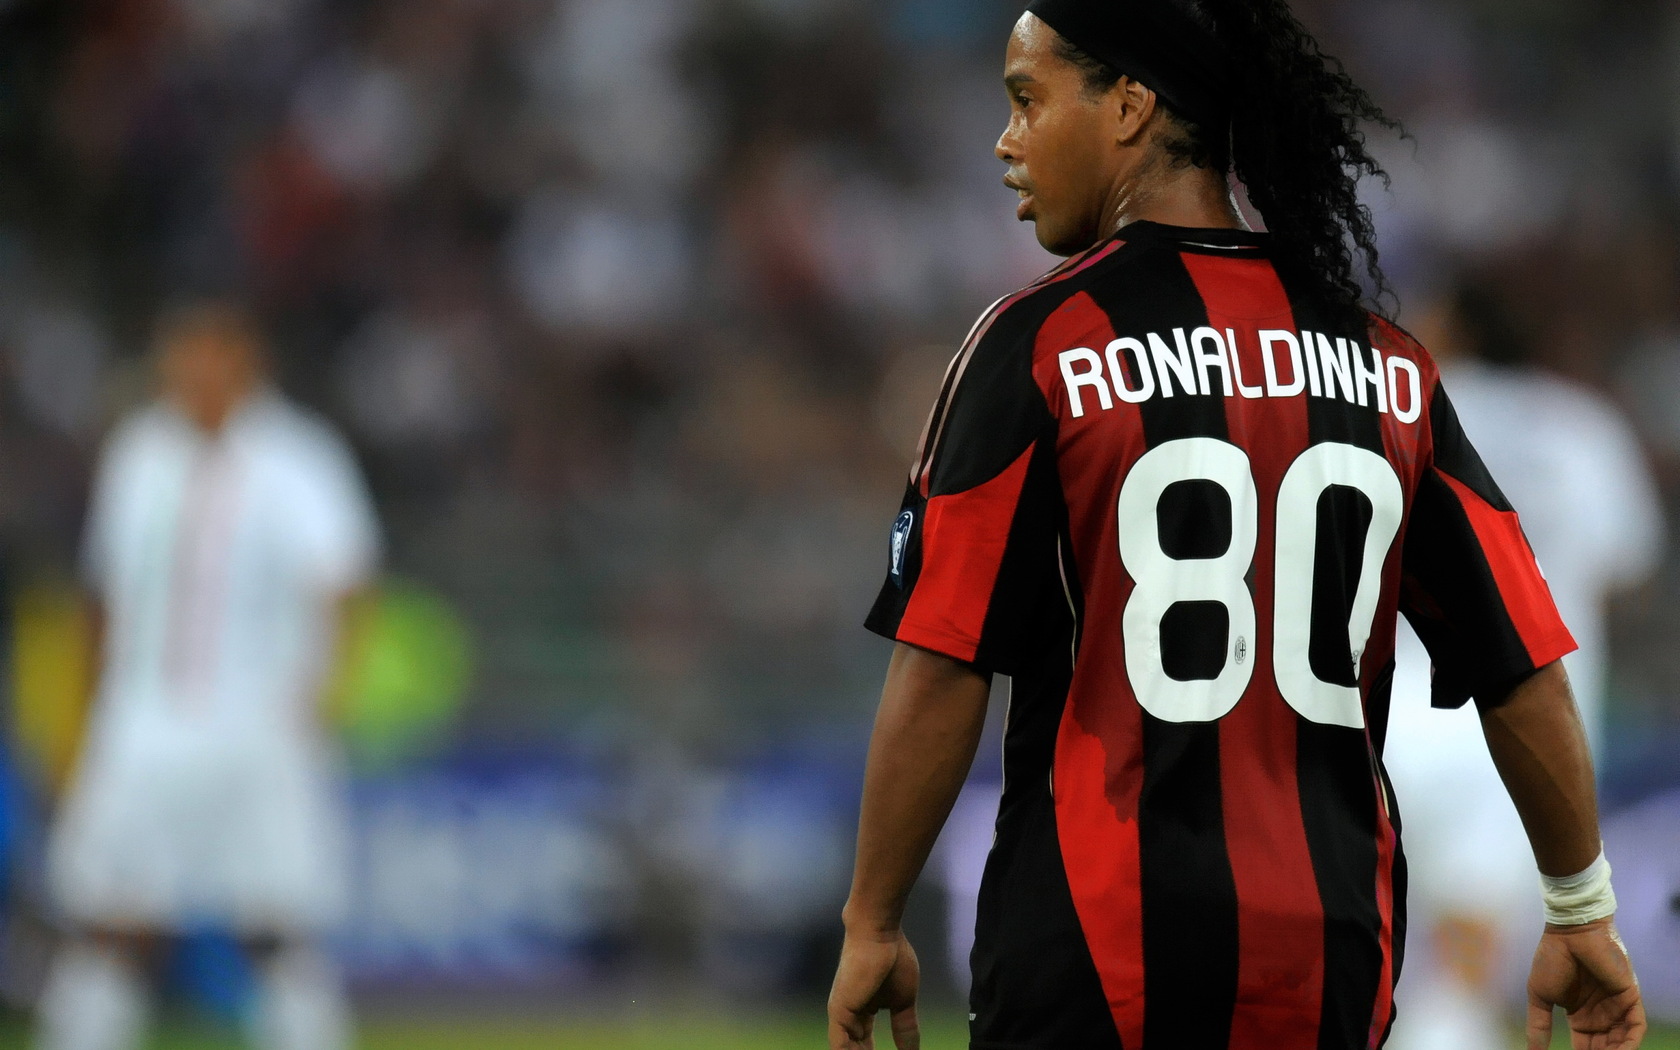 Ronaldinho Football Player Wallpapers - 1680x1050 - 375970